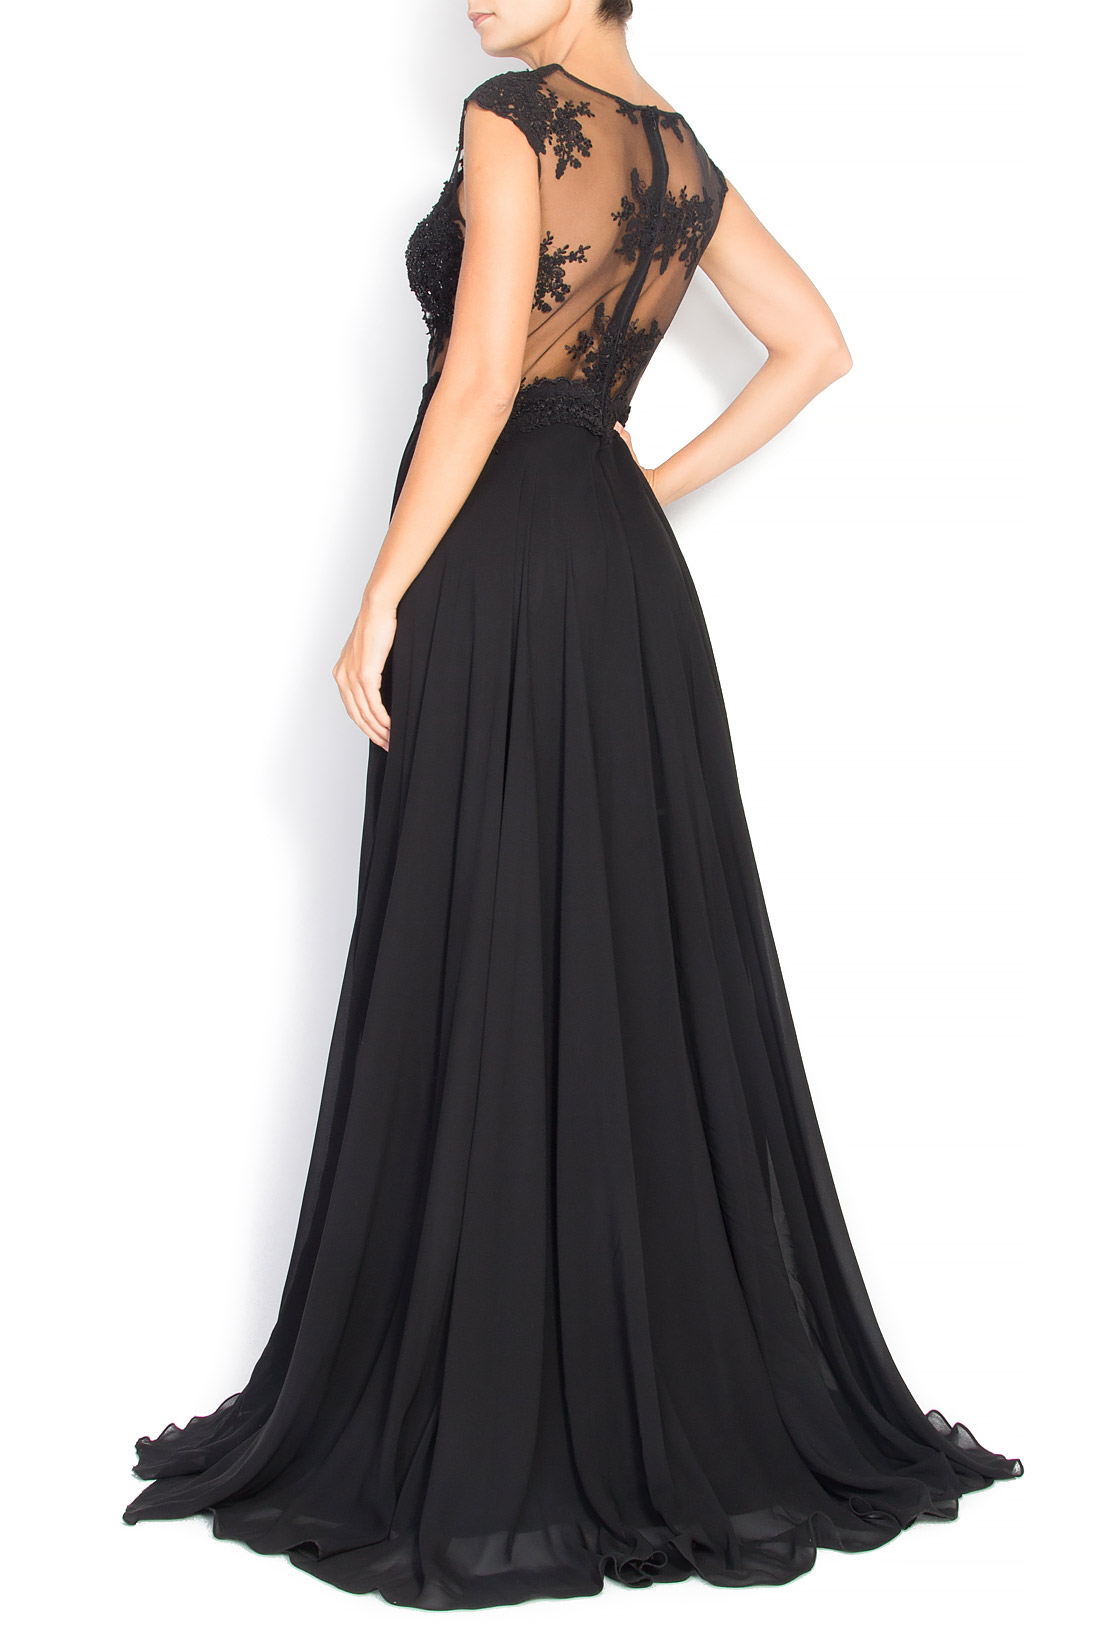 'Black Diamond' embellished tulle and lace gown Raffaela Moraru image 3